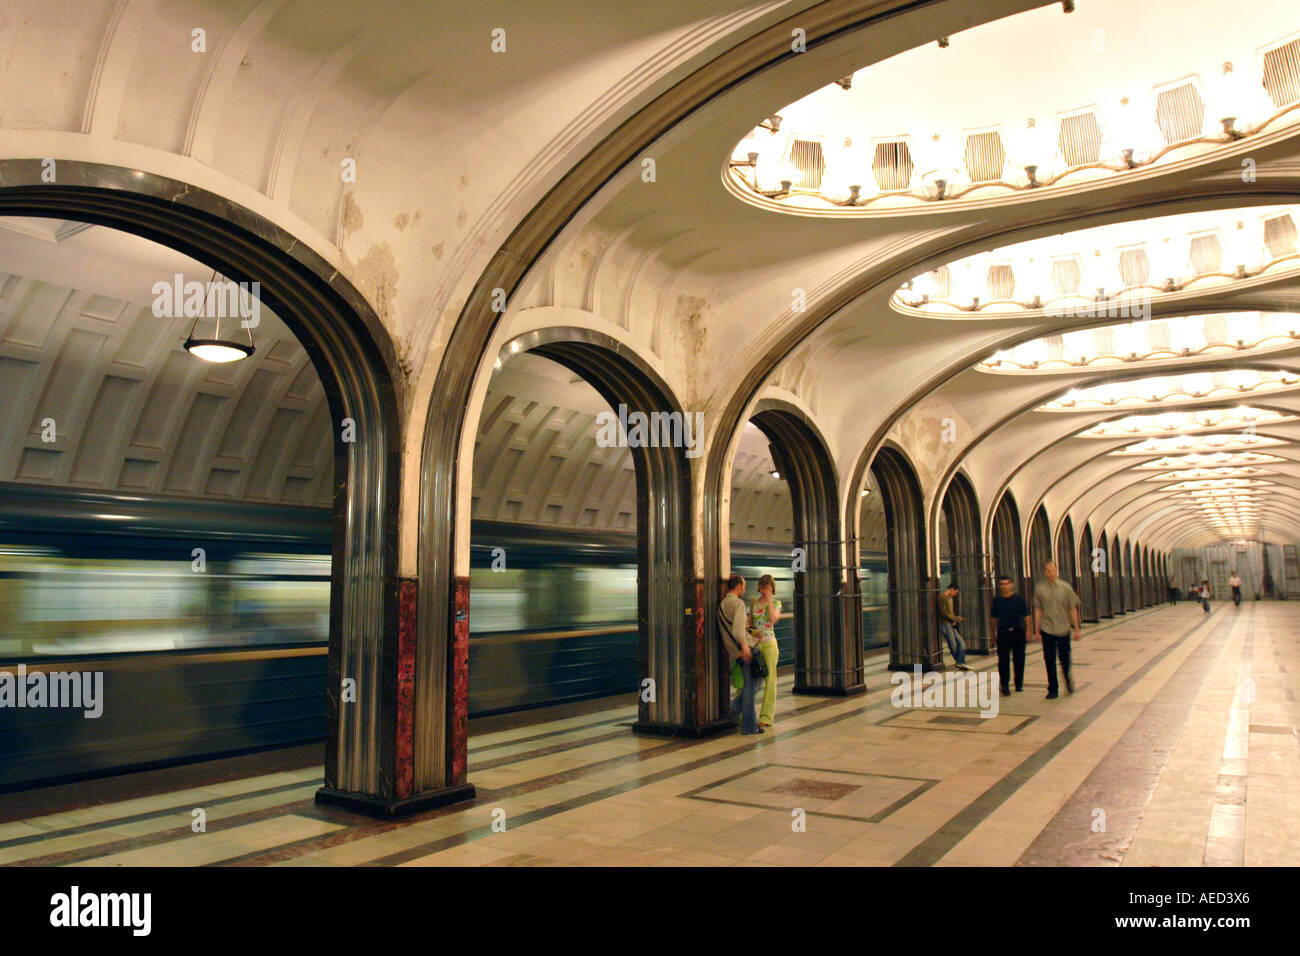 La station de métro Mayakovskaya, Moscou, Russie Banque D'Images